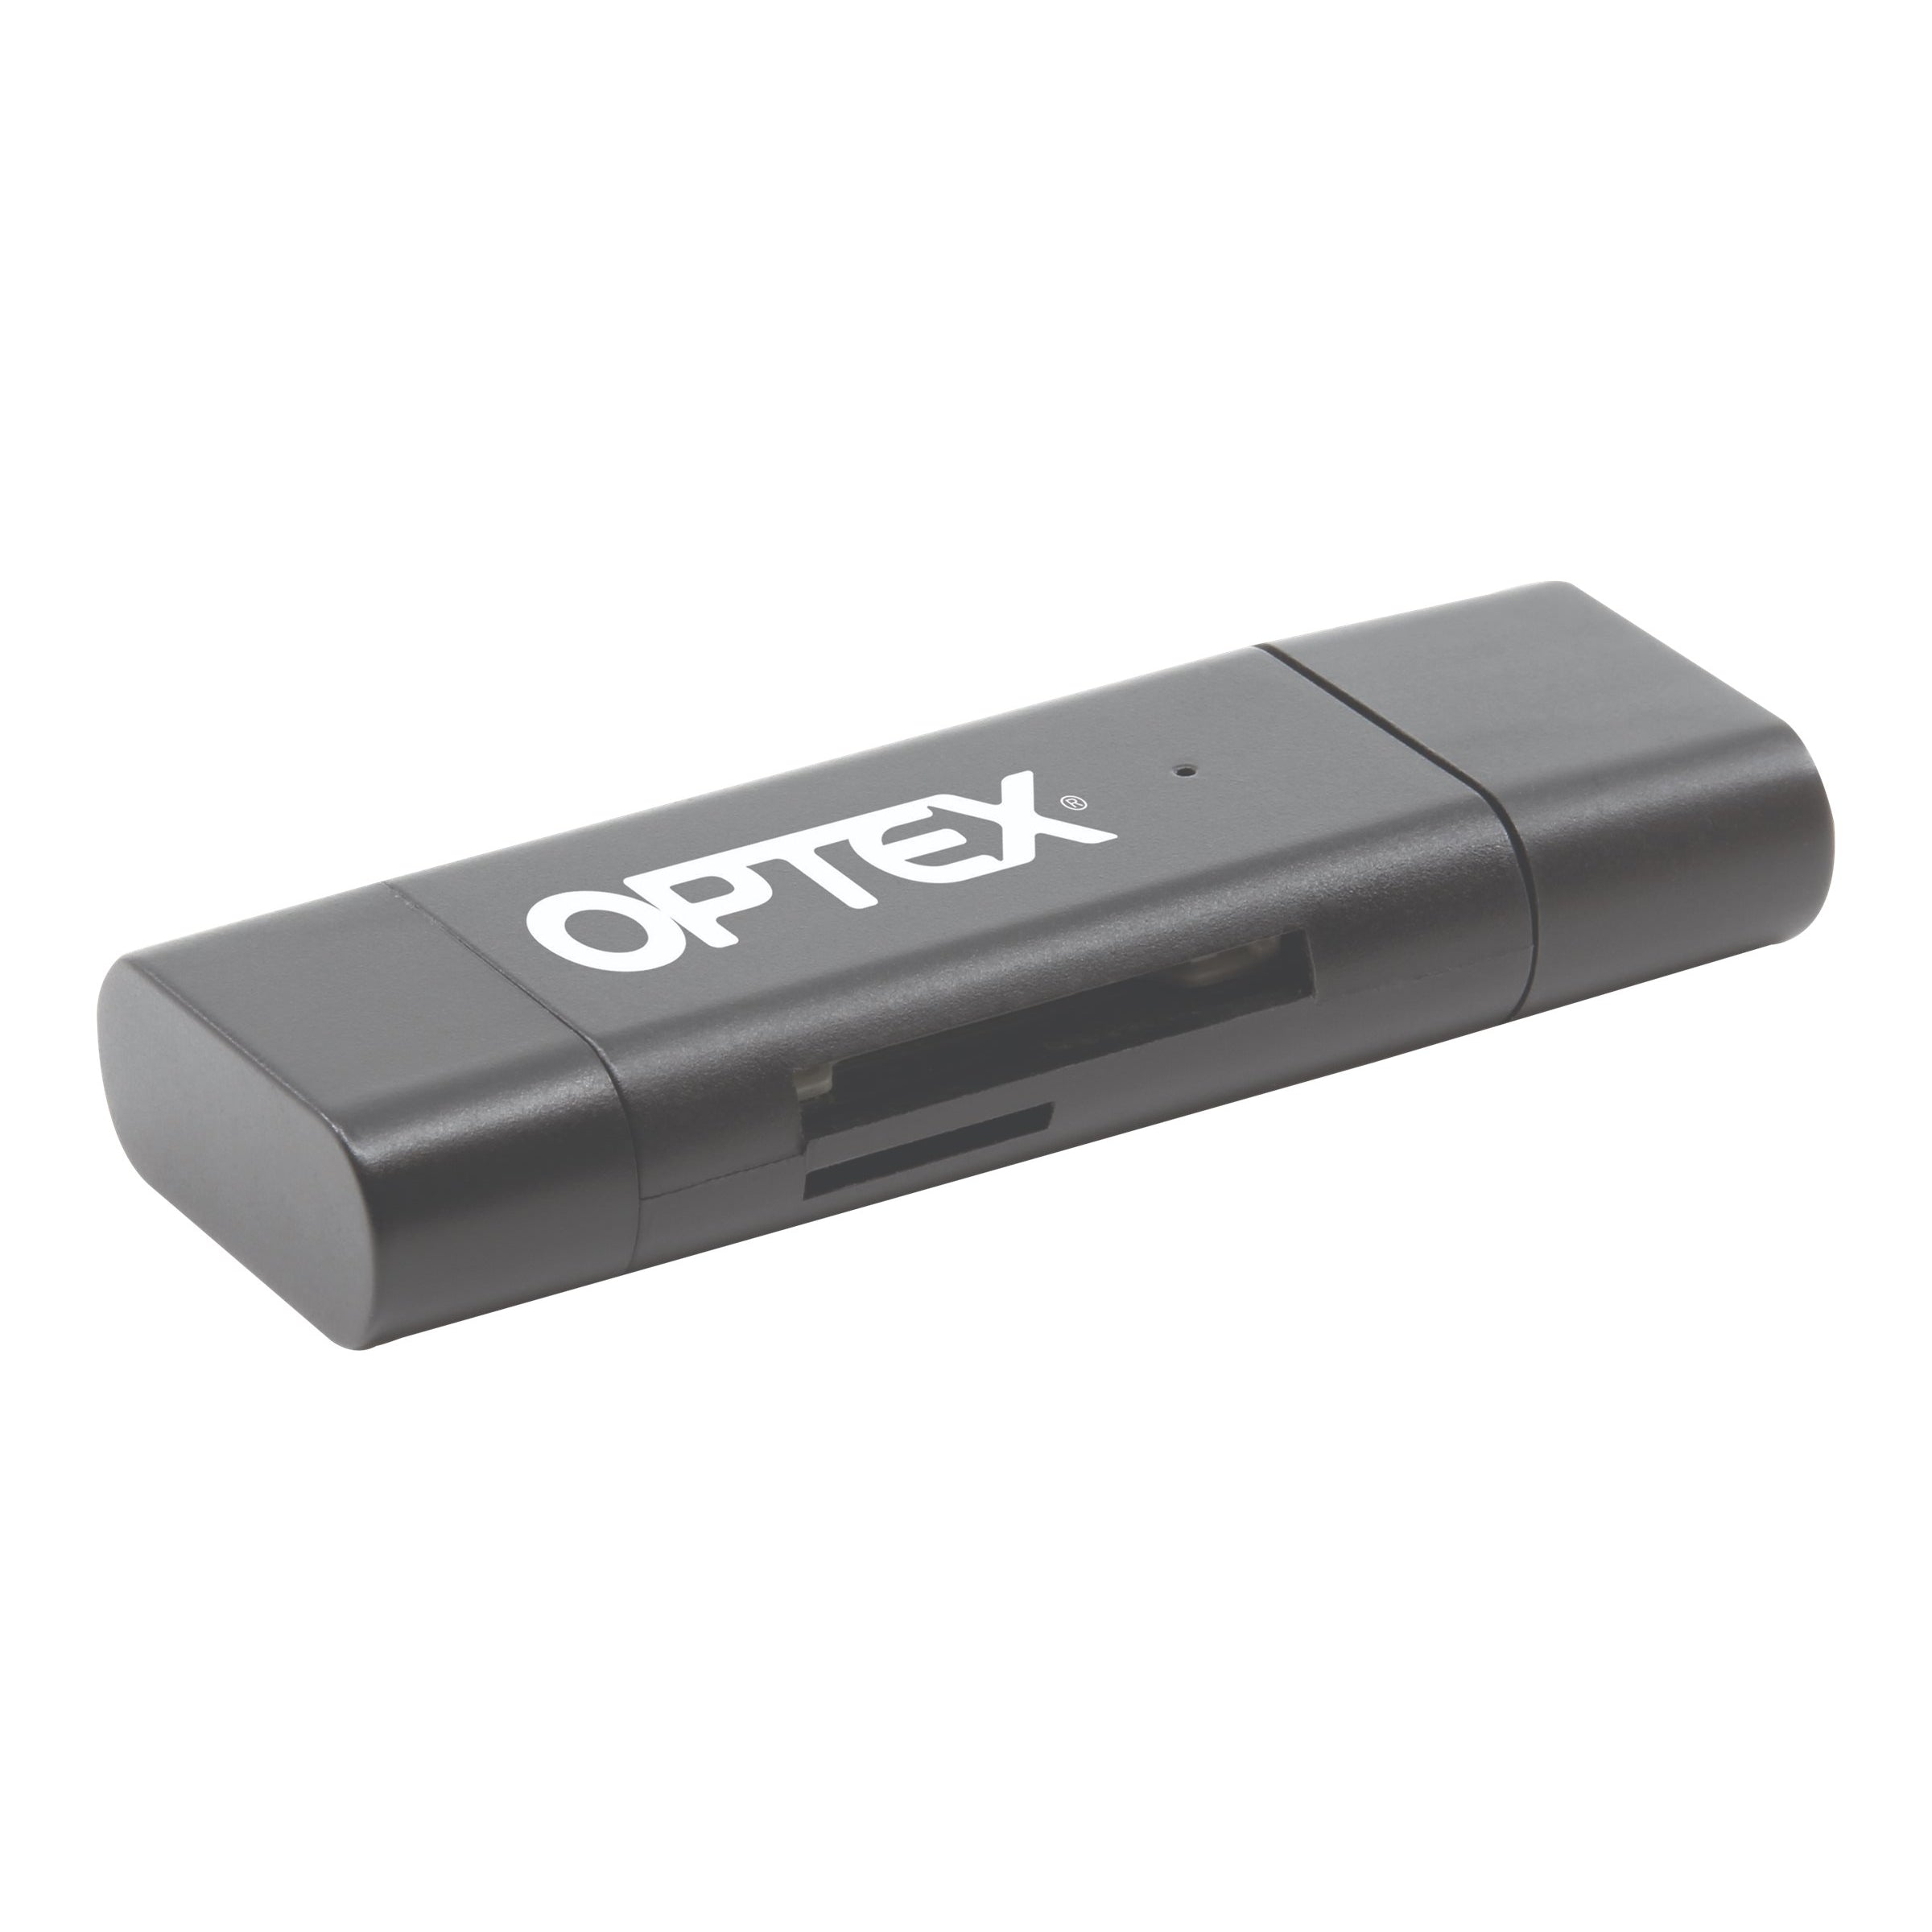 Optex USB Type-C & USB 3.0 High Speed Card Reader